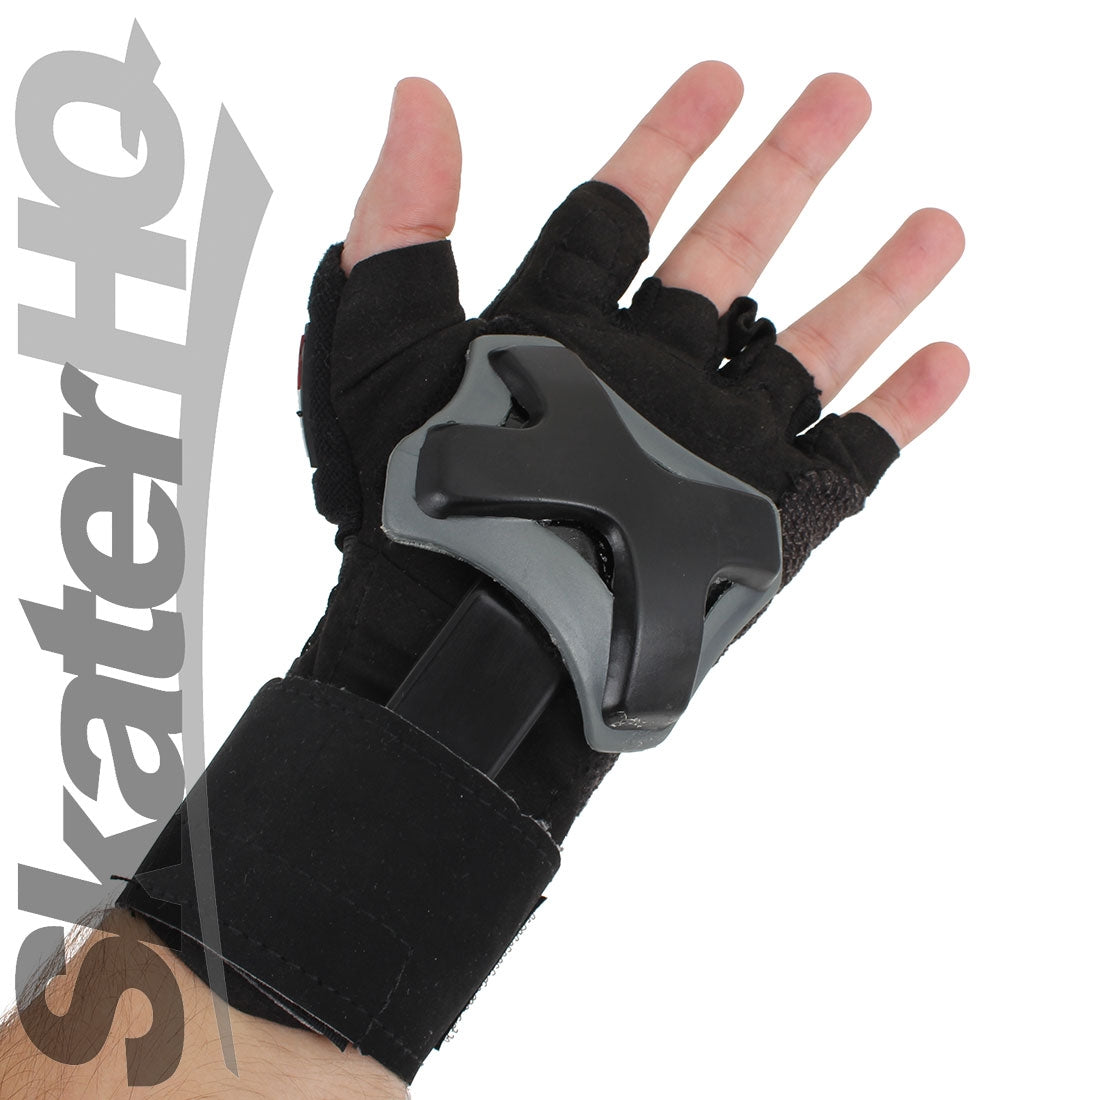 Seba Wrist Guard Gloves Medium Protective Gear